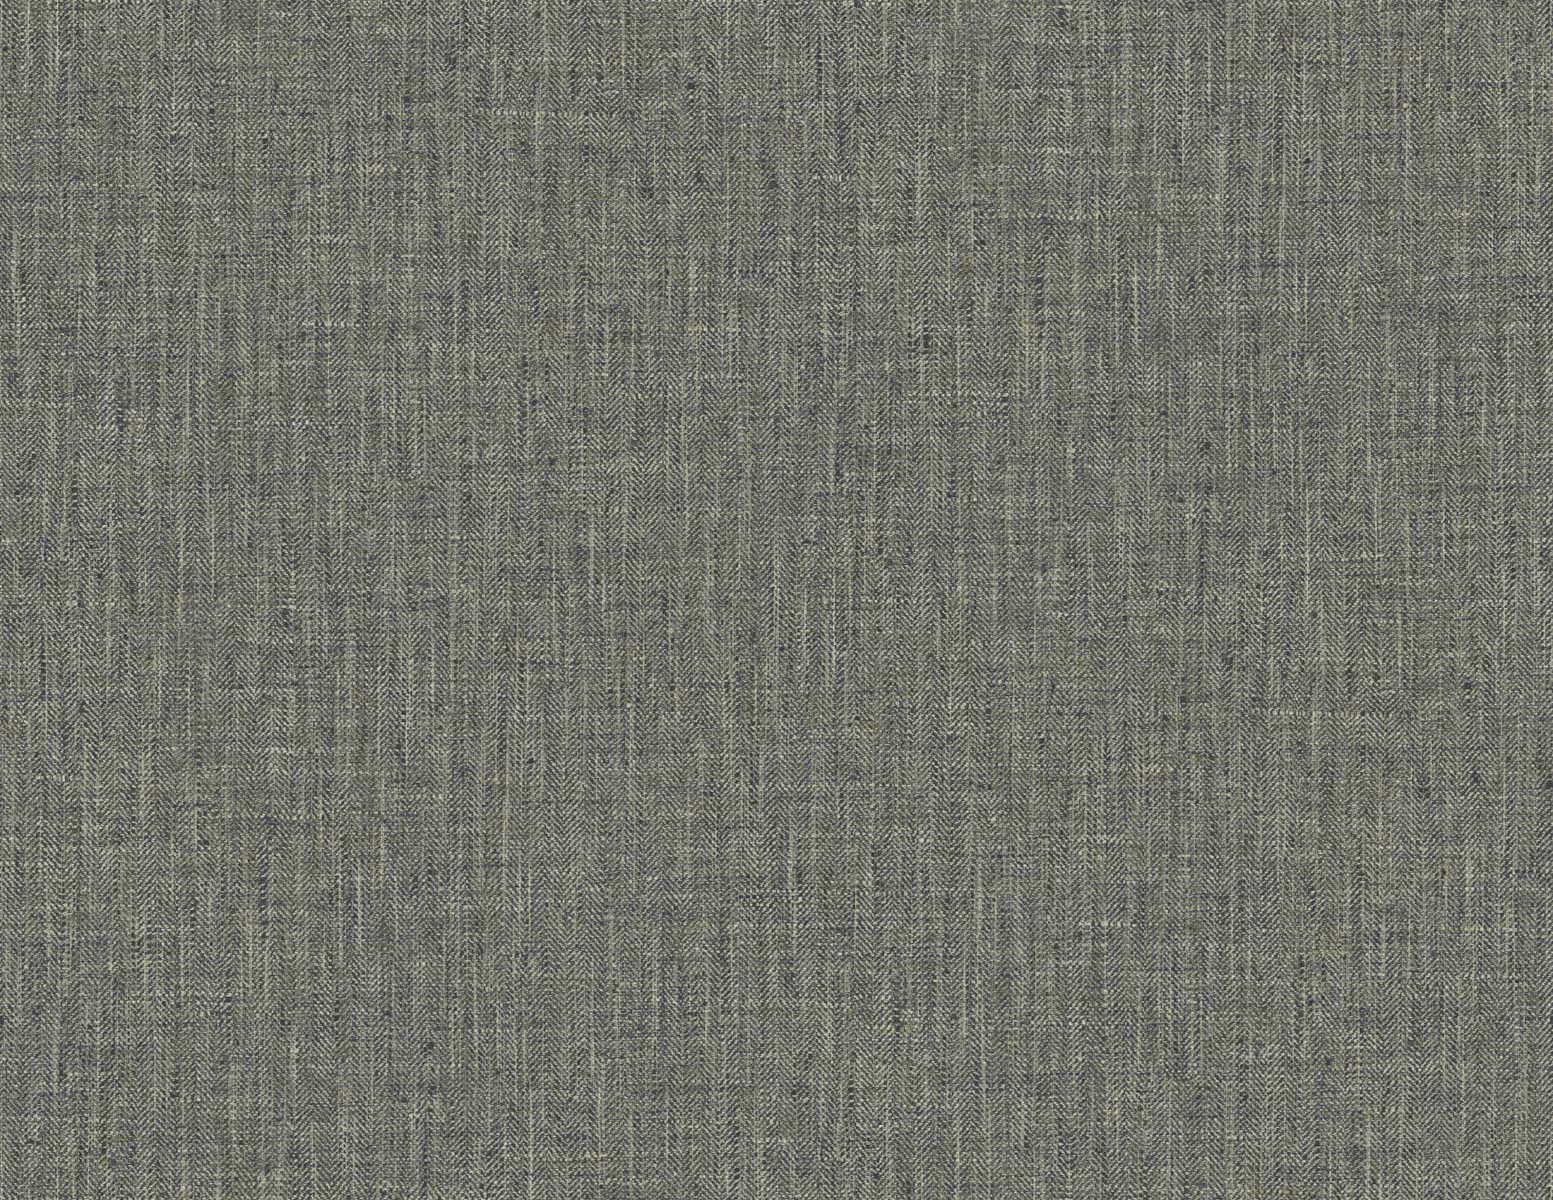 DuPont TG60010 Tedlar Textures Tweed Embossed Vinyl  Wallpaper Salt & Pepper